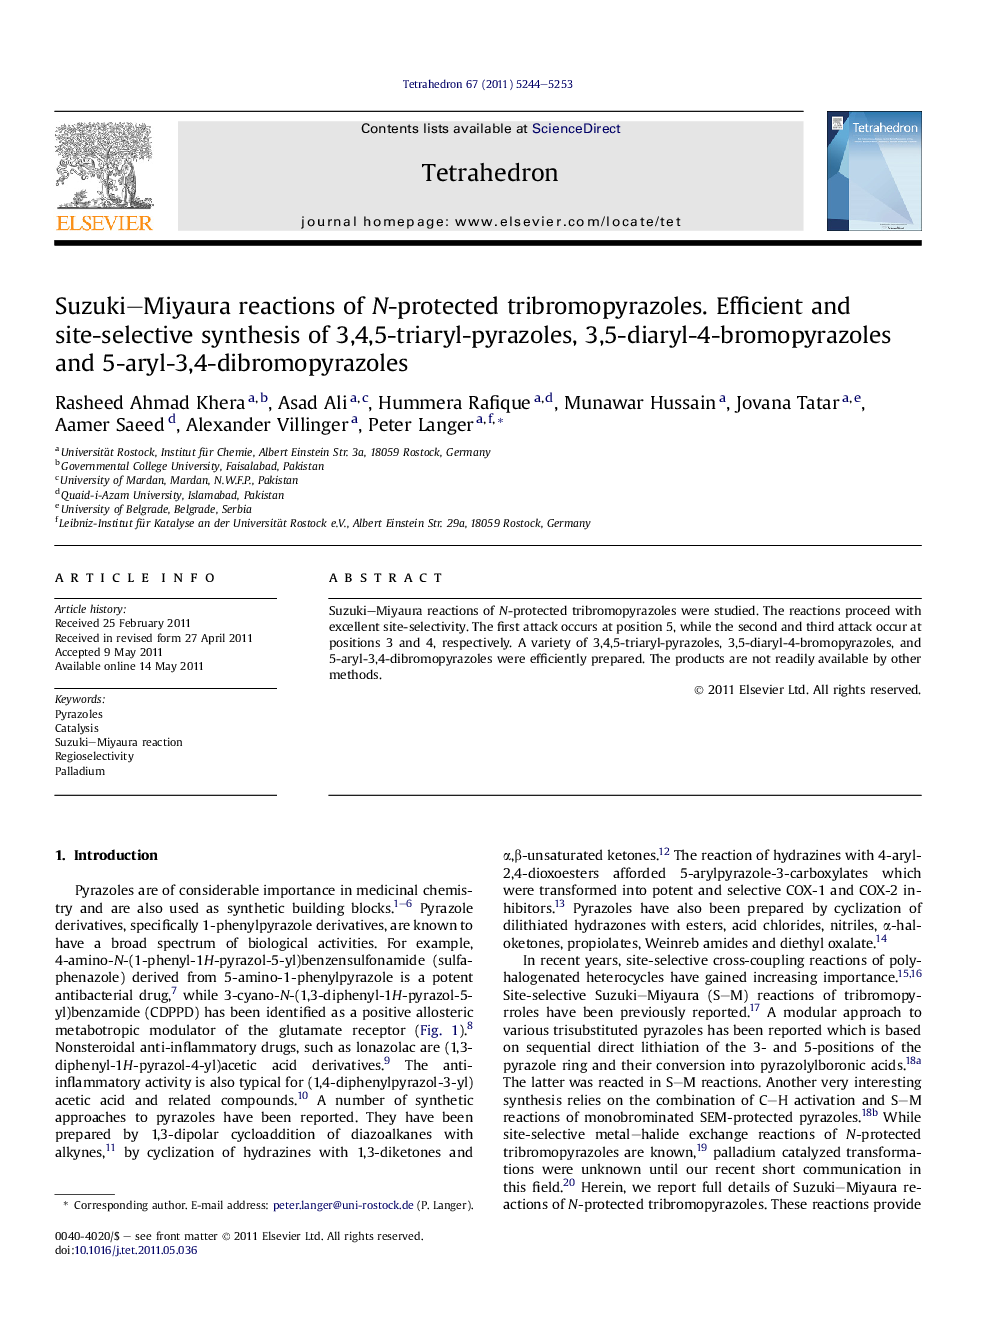 Suzuki–Miyaura reactions of N-protected tribromopyrazoles. Efficient and site-selective synthesis of 3,4,5-triaryl-pyrazoles, 3,5-diaryl-4-bromopyrazoles and 5-aryl-3,4-dibromopyrazoles